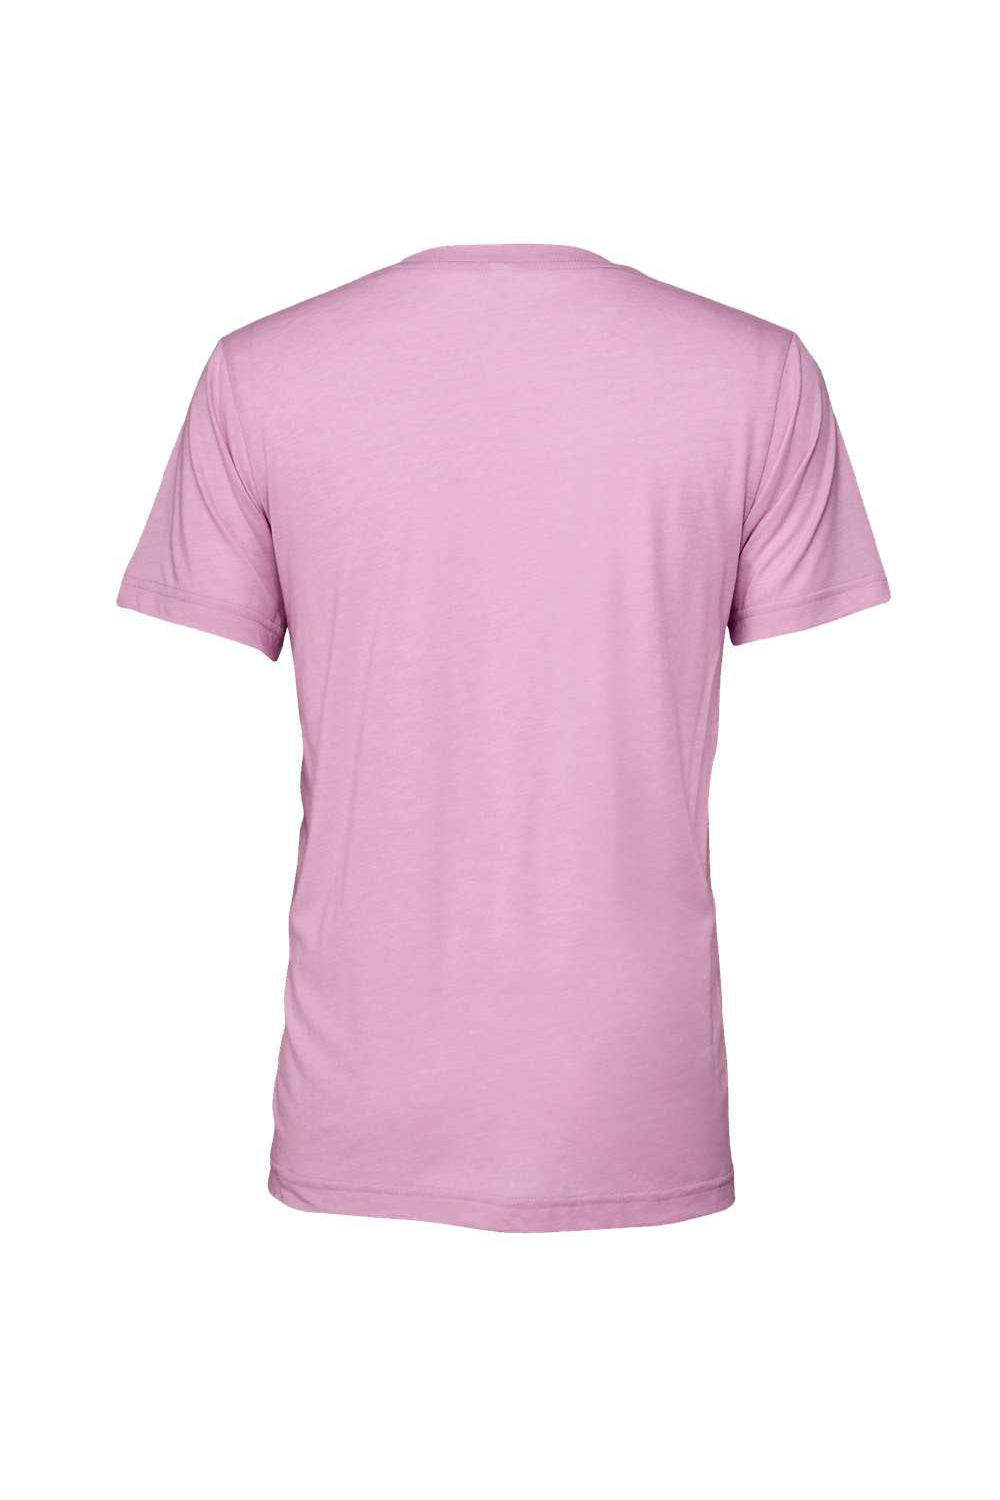 Bella + Canvas BC3413/3413C/3413 Mens Short Sleeve Crewneck T-Shirt Lilac Pink Flat Back